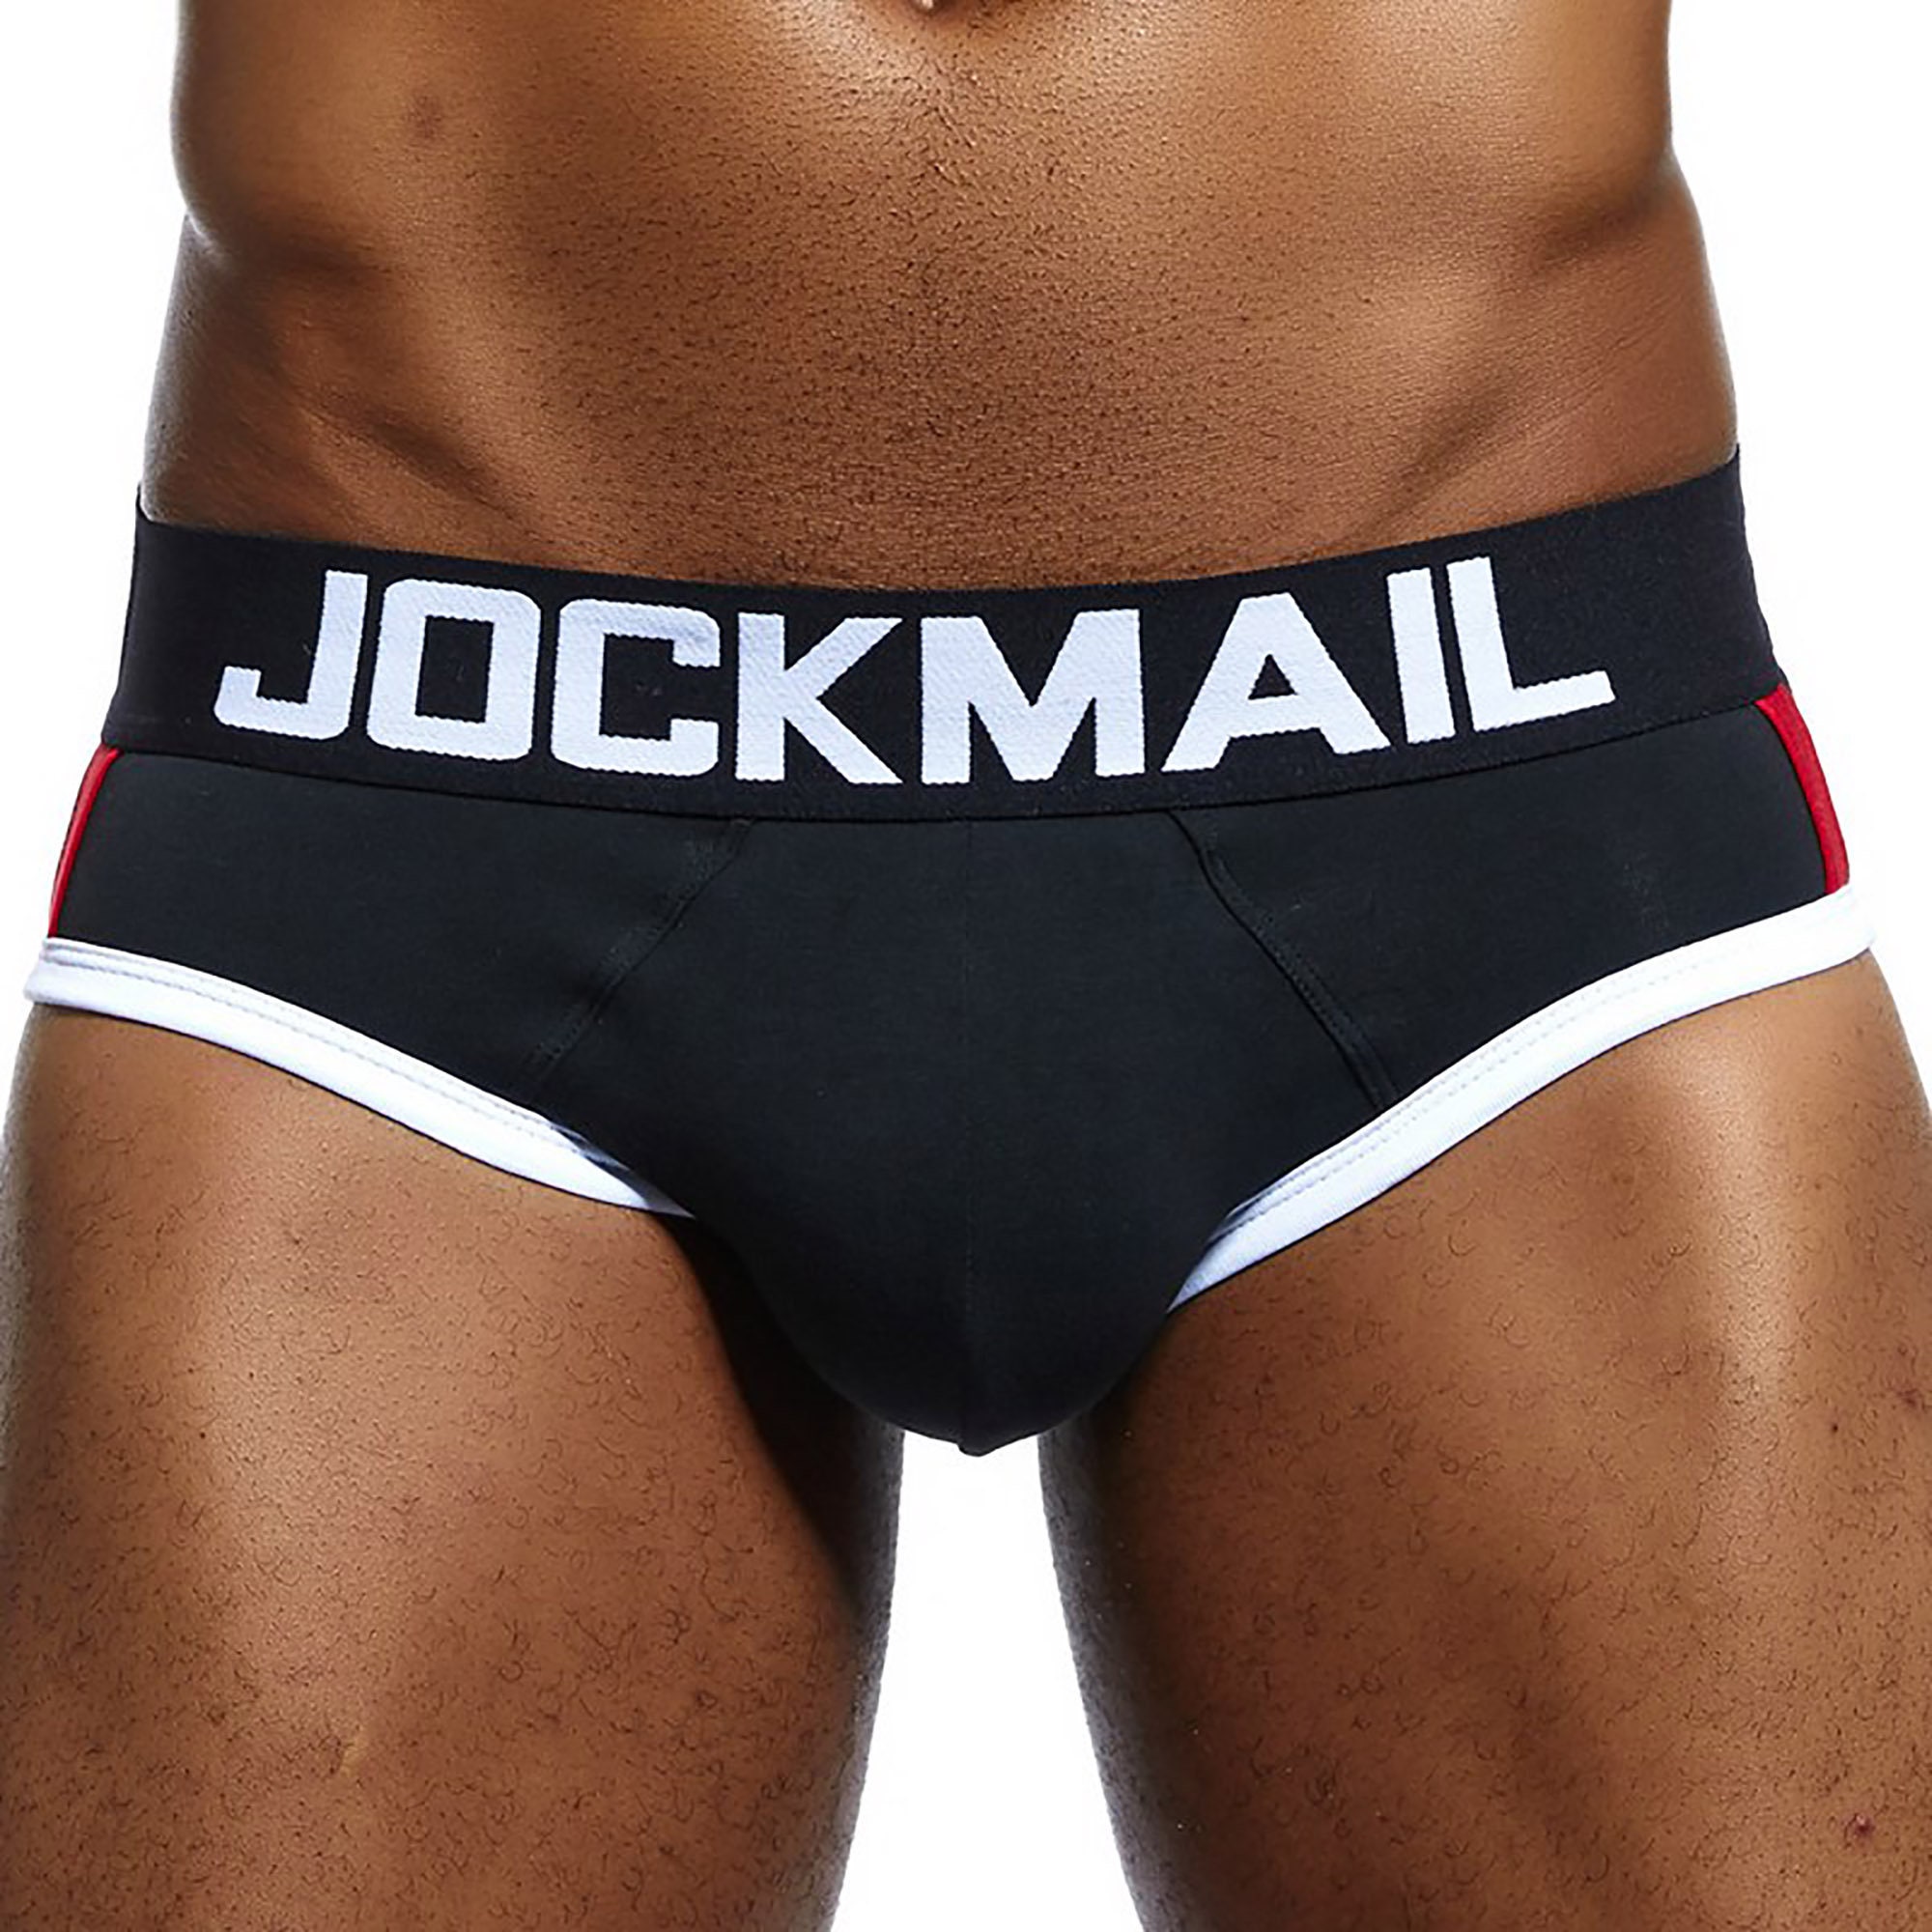 Ftm Packer Underwear -  Australia